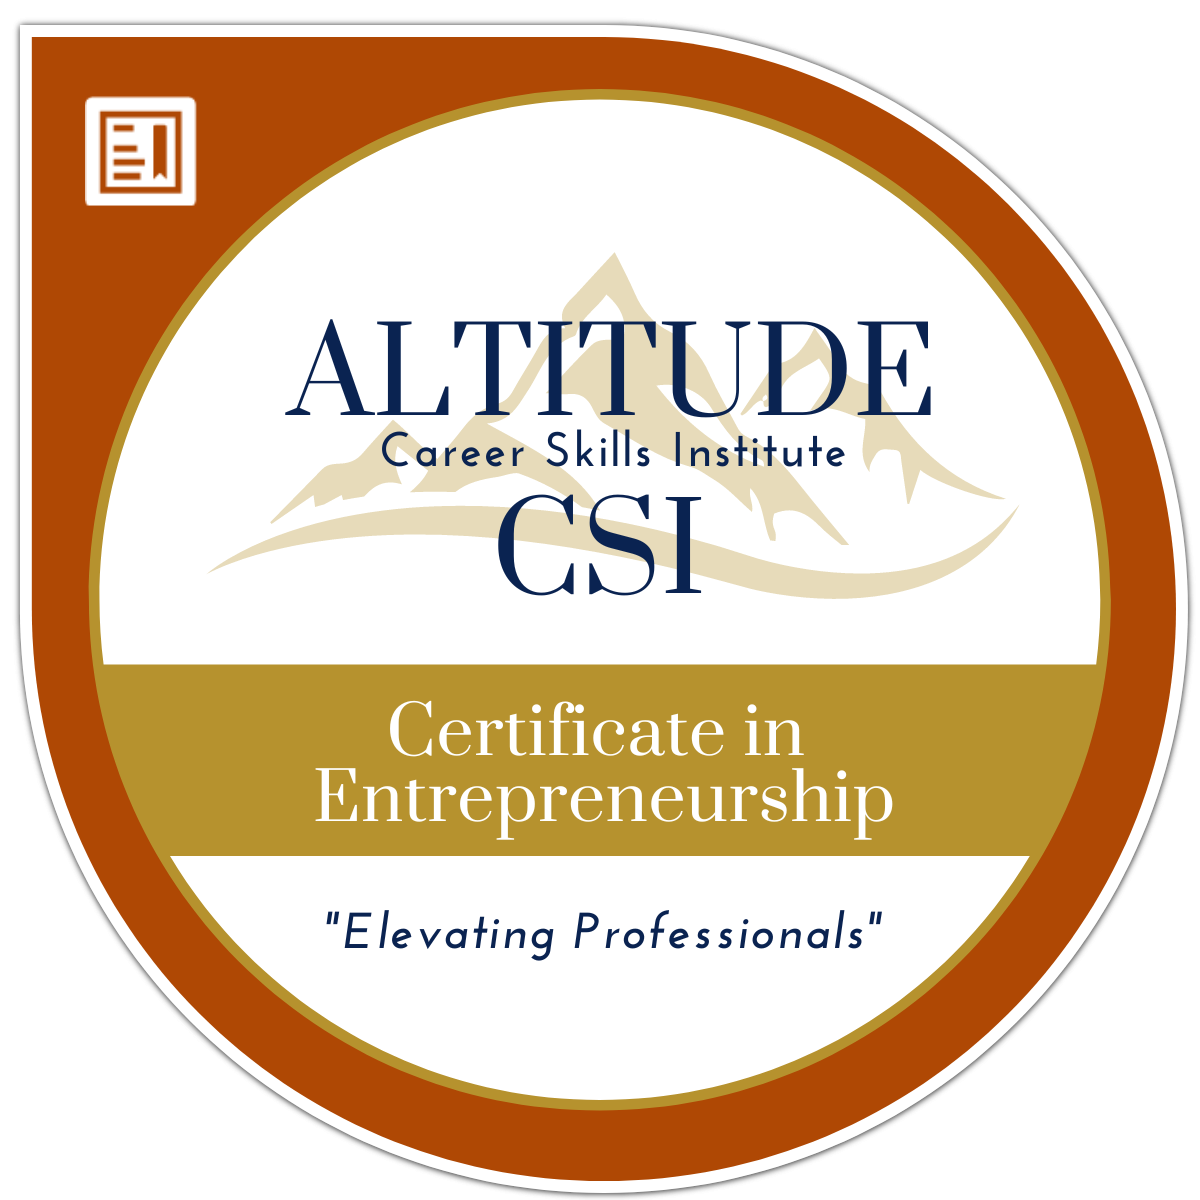 Certificate in Entrepreneurship (ACE CREDIT)